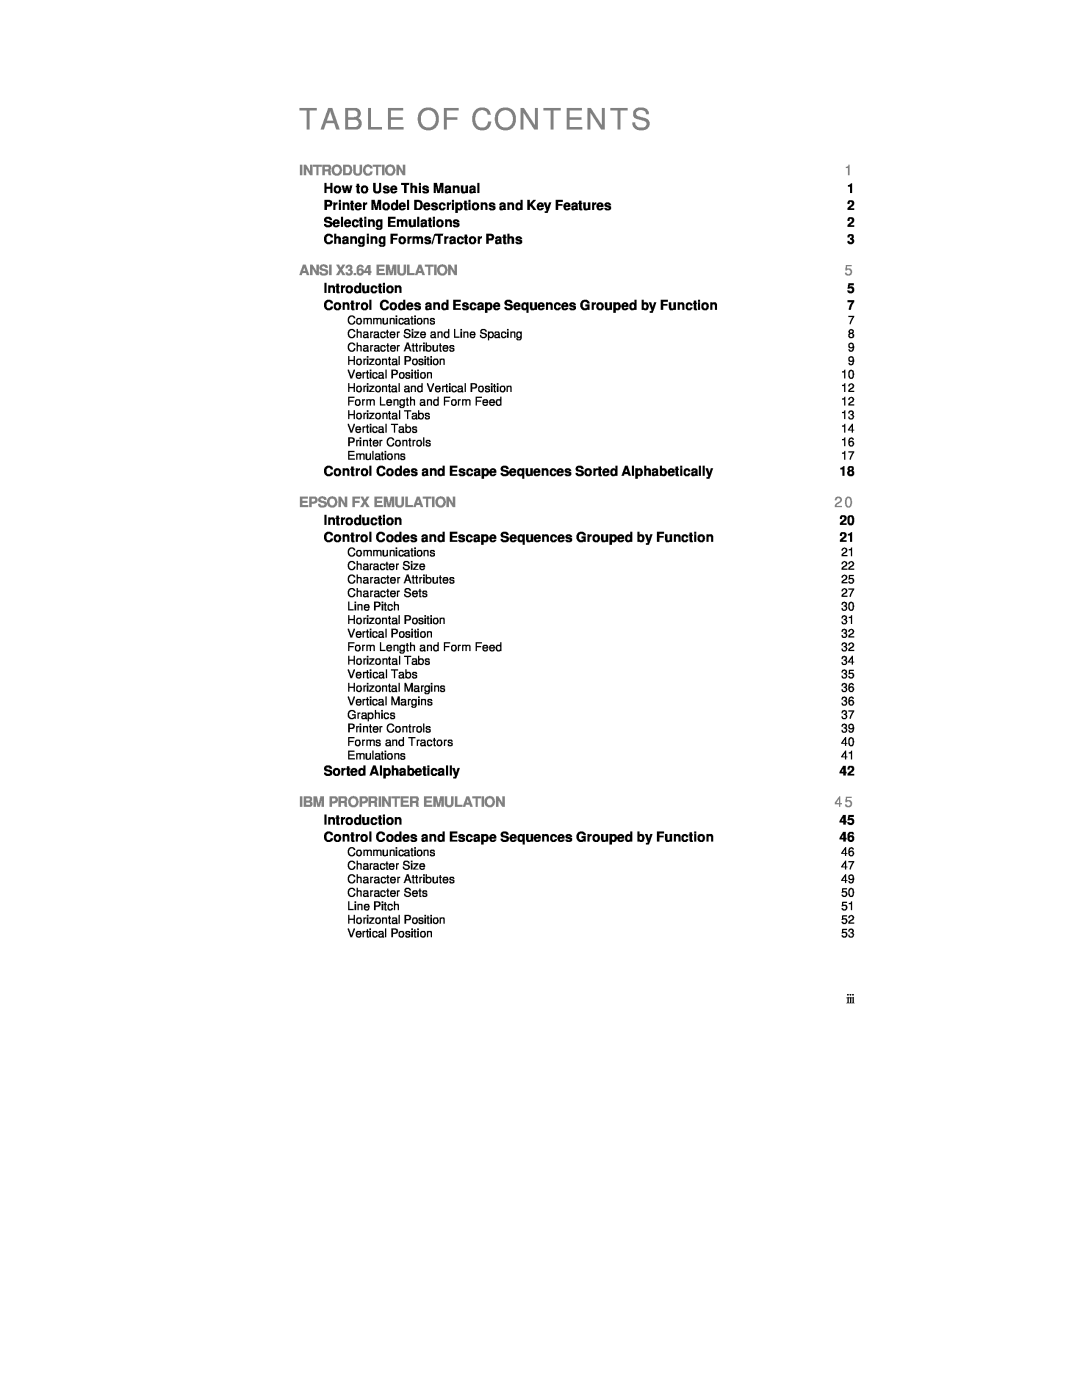 Printek PrintMaster 850 Series manual Table Of Contents, Introduction, ANSI X3.64 EMULATION, Epson Fx Emulation 